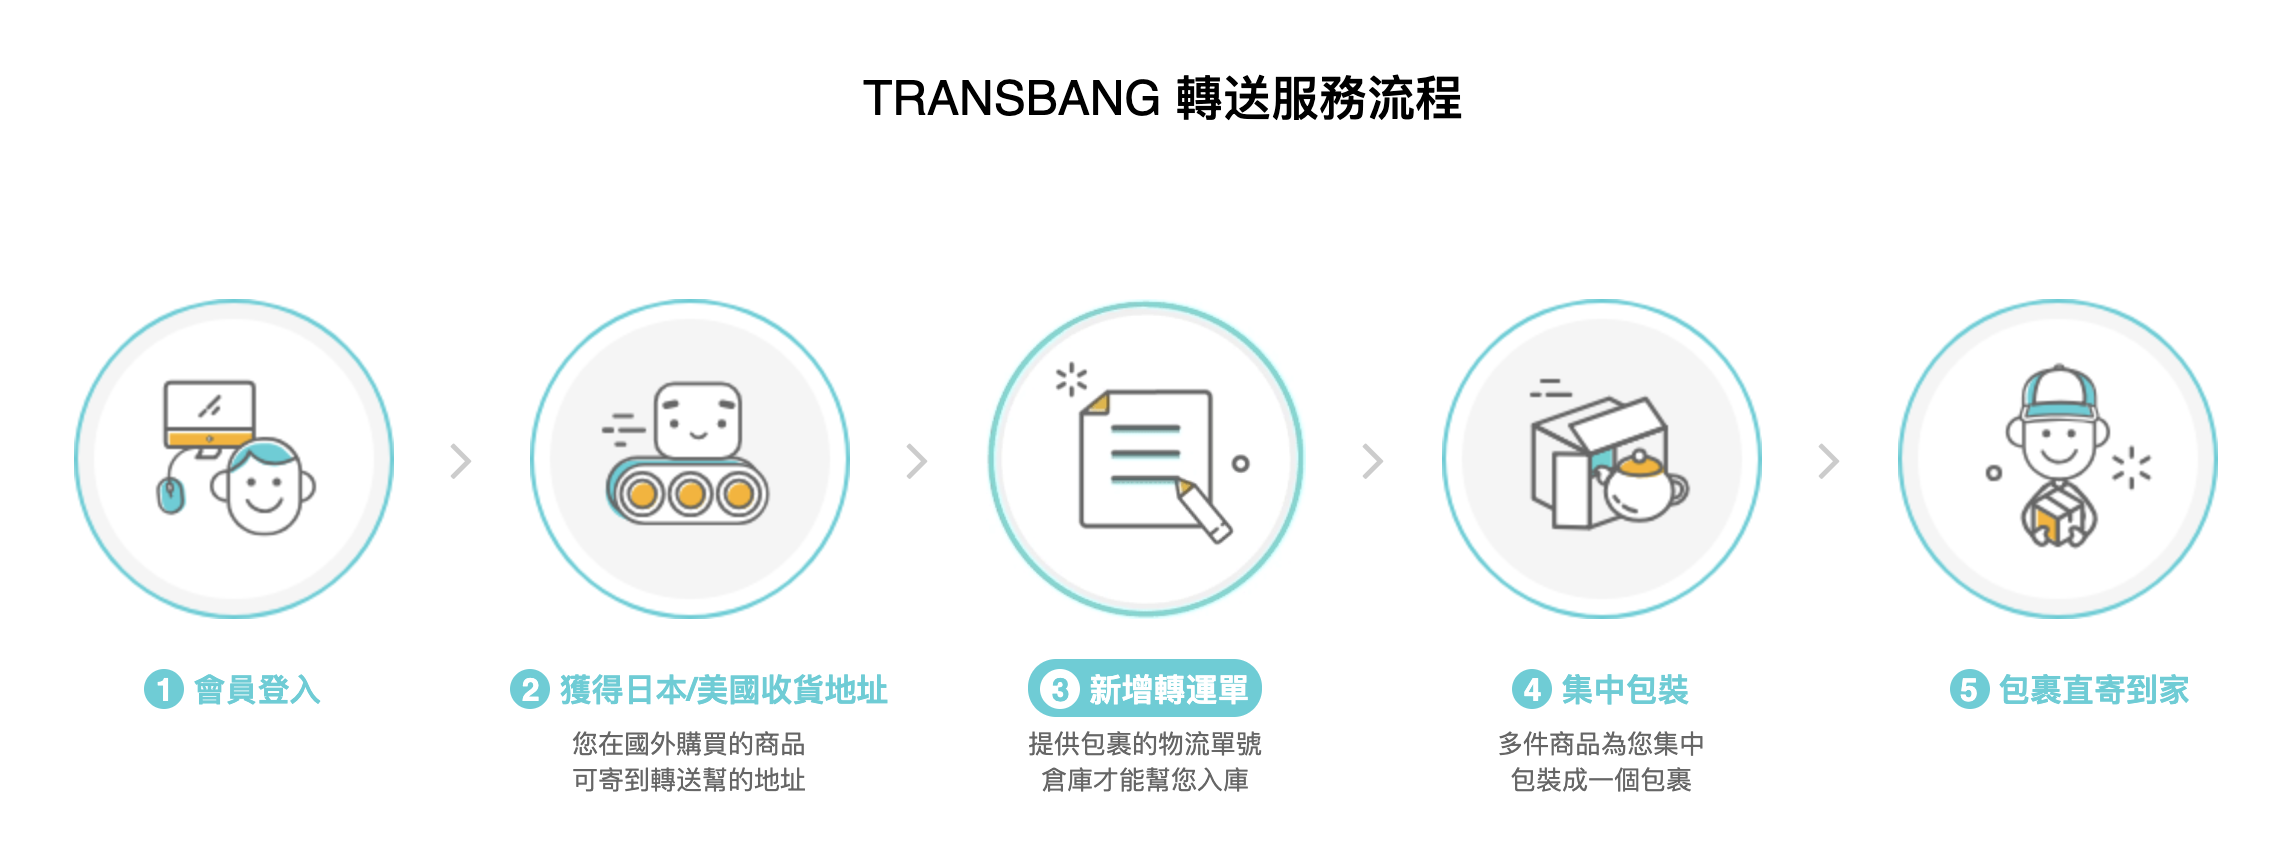 TRANSBANG轉送幫轉送服務流程